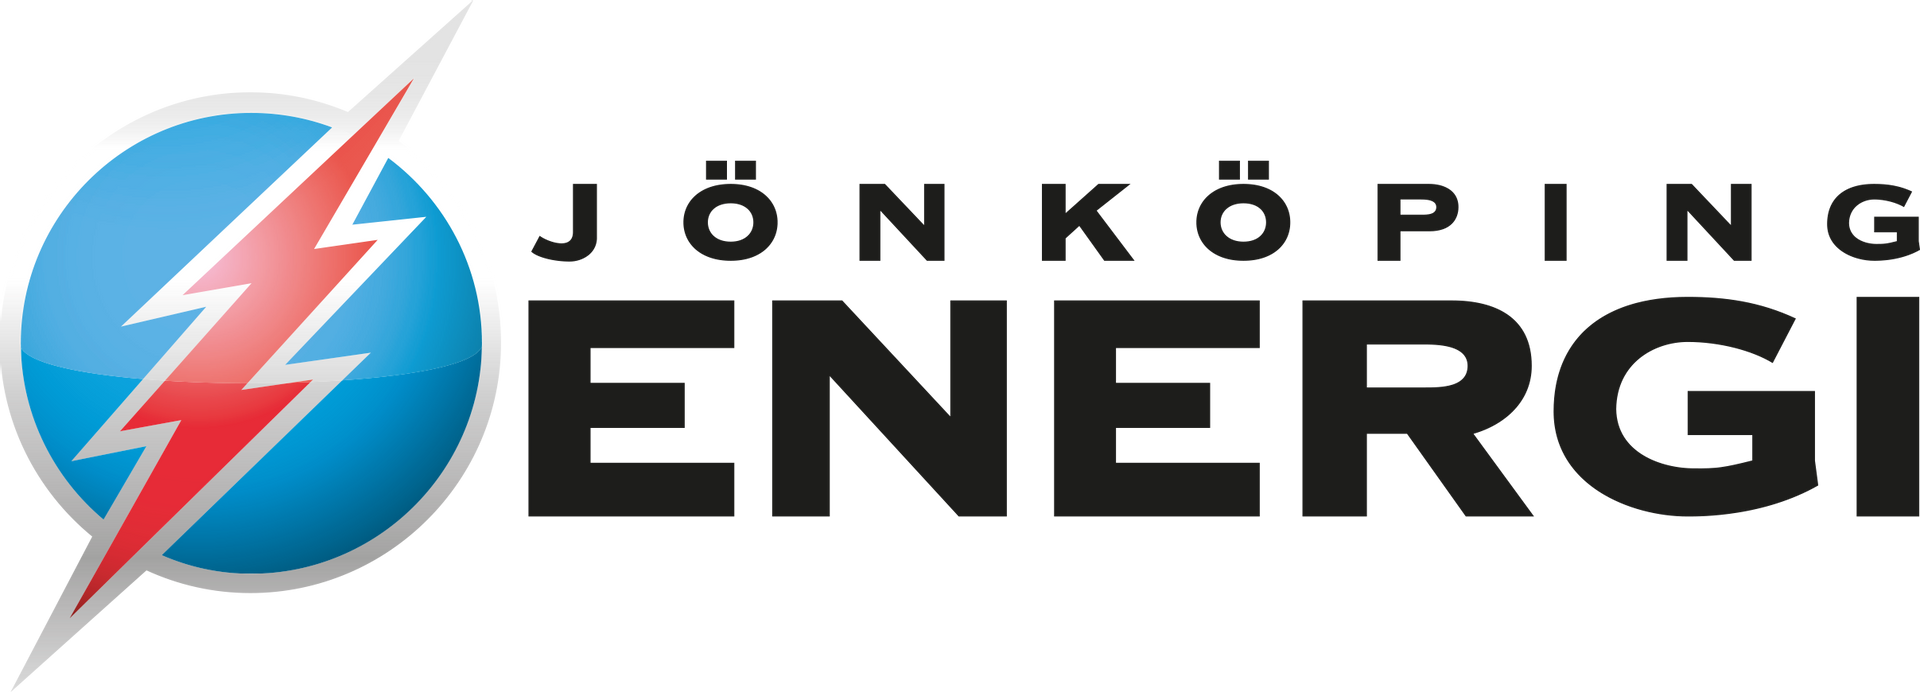 Logotype Jönköping Energi